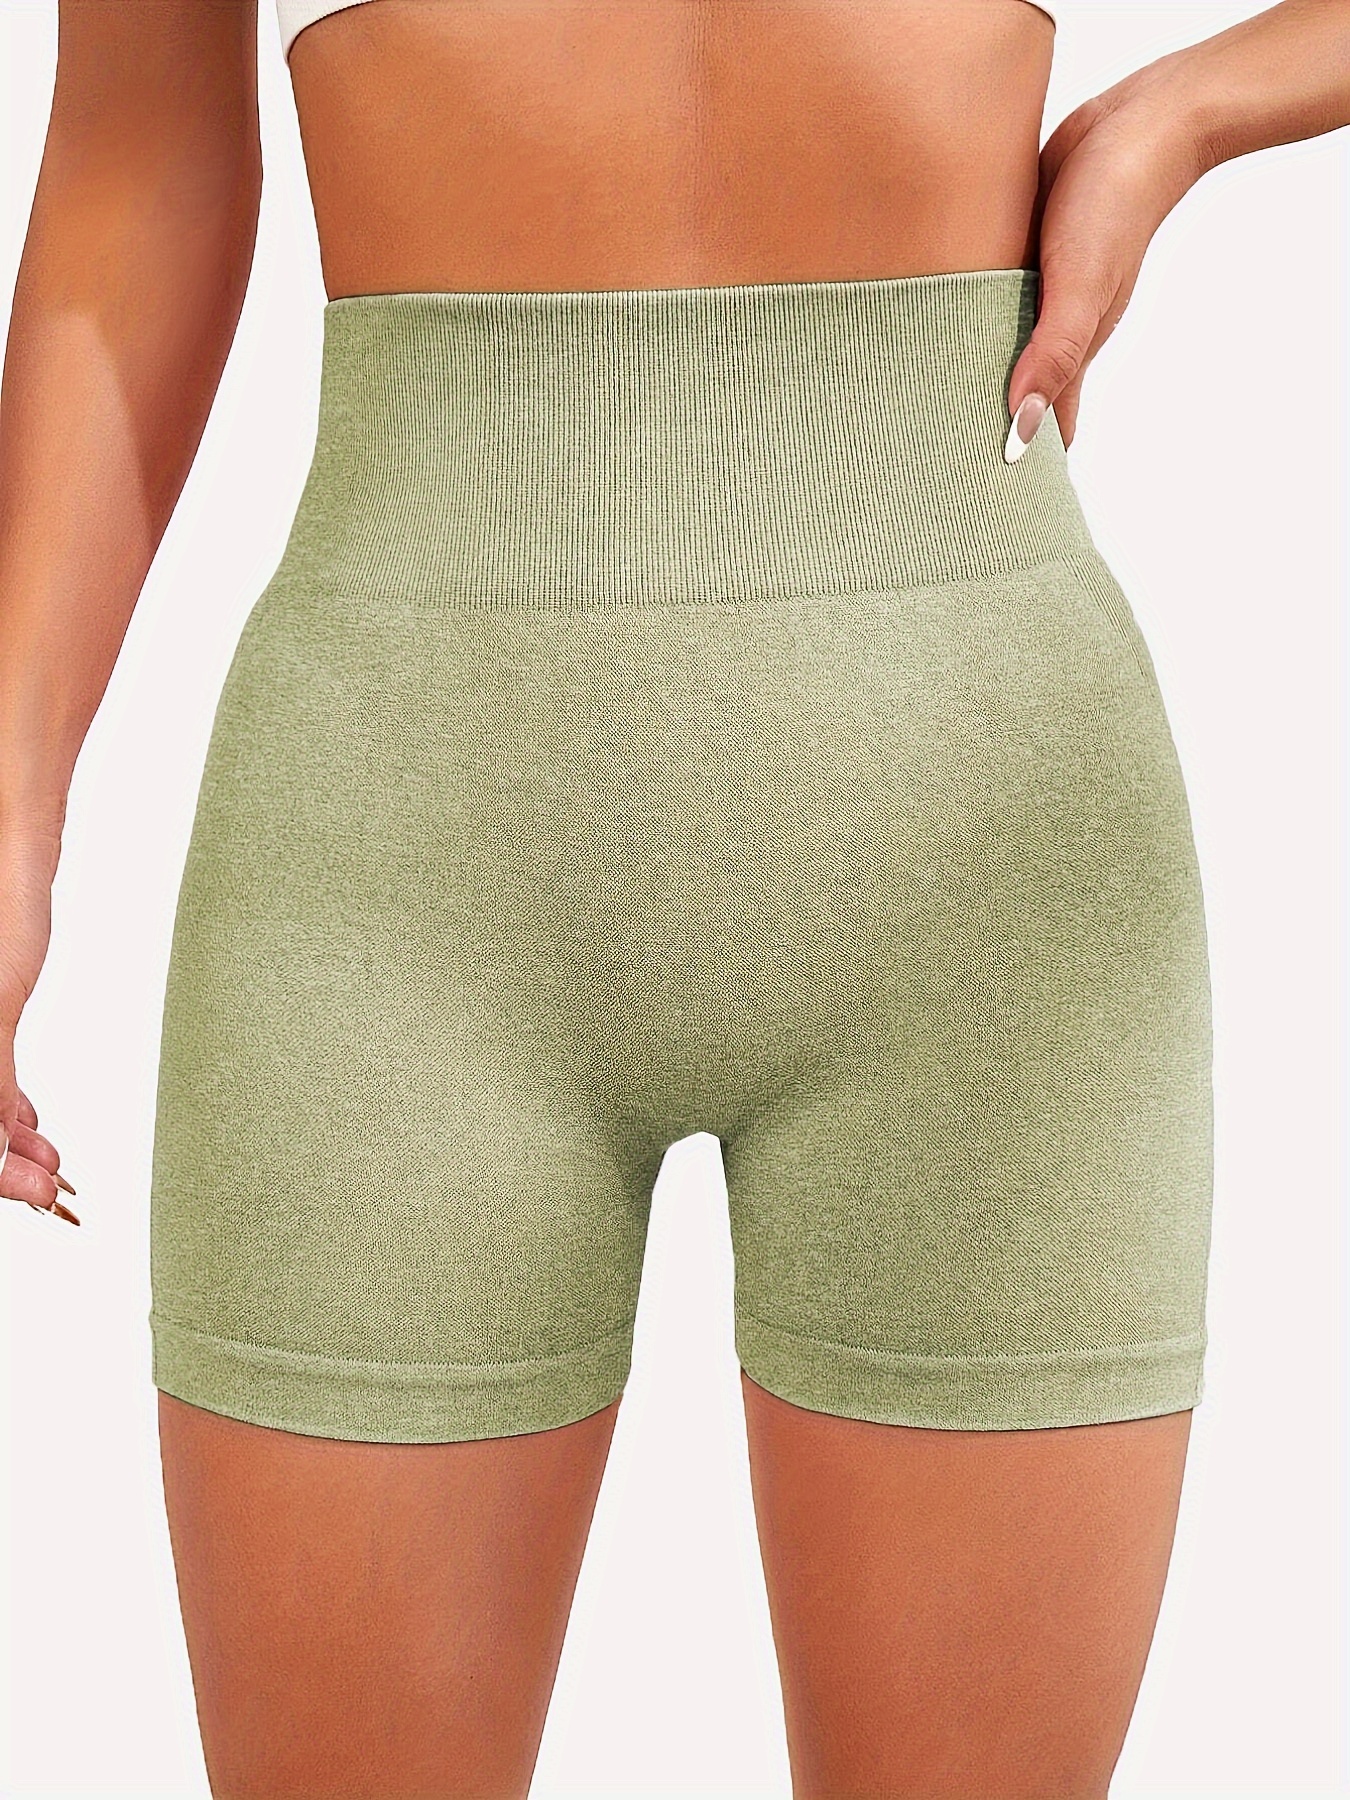 Spanks Shorts for Women Sports High Pants Yoga Womens Tight Waist